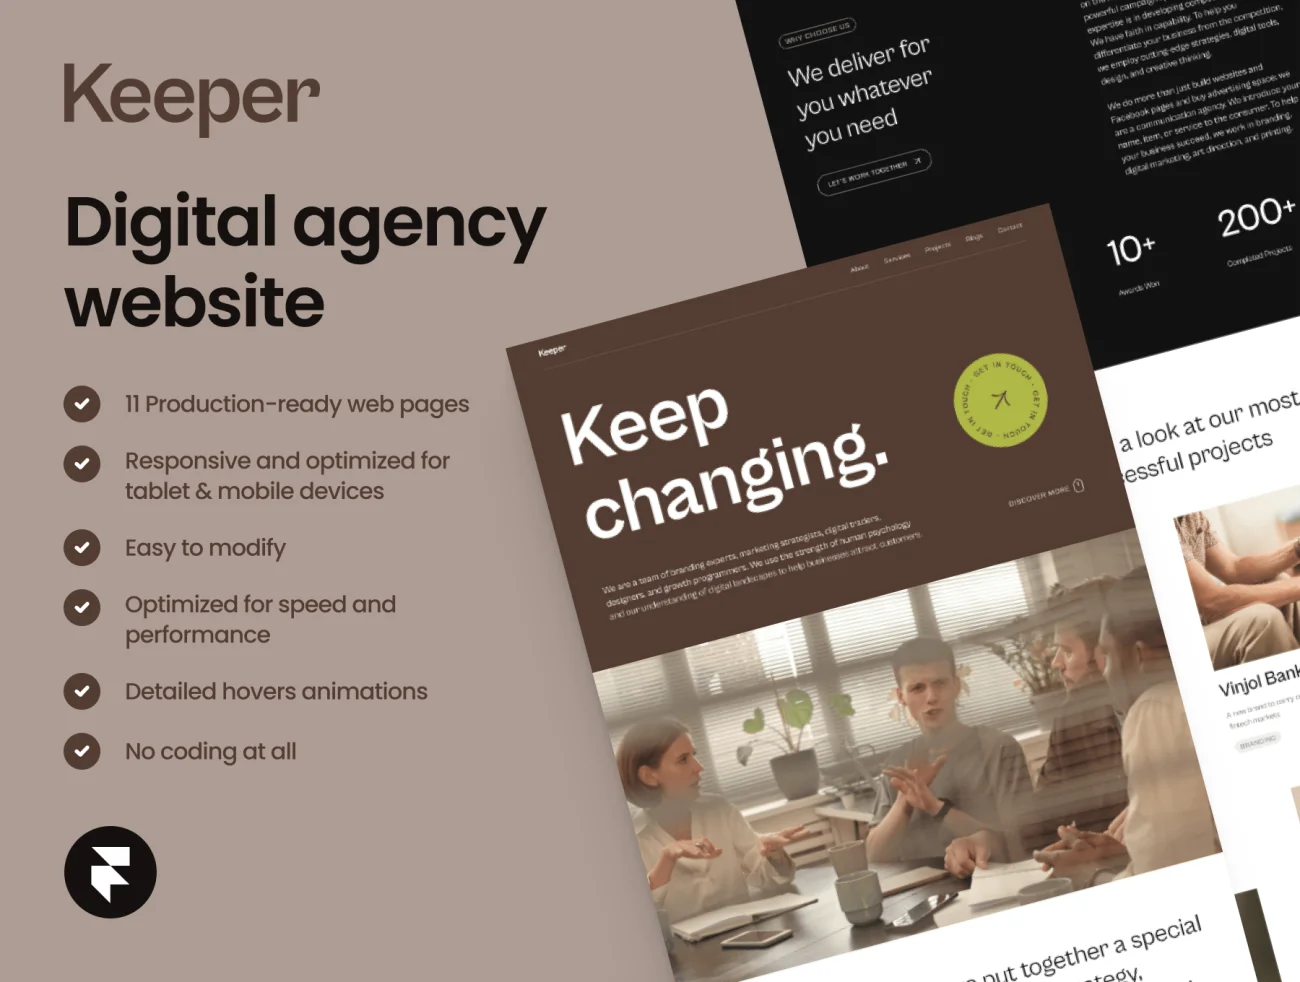 Keeper - Framer 数字机构网站模板 Keeper - Digital agency website for Framer缩略图到位啦UI